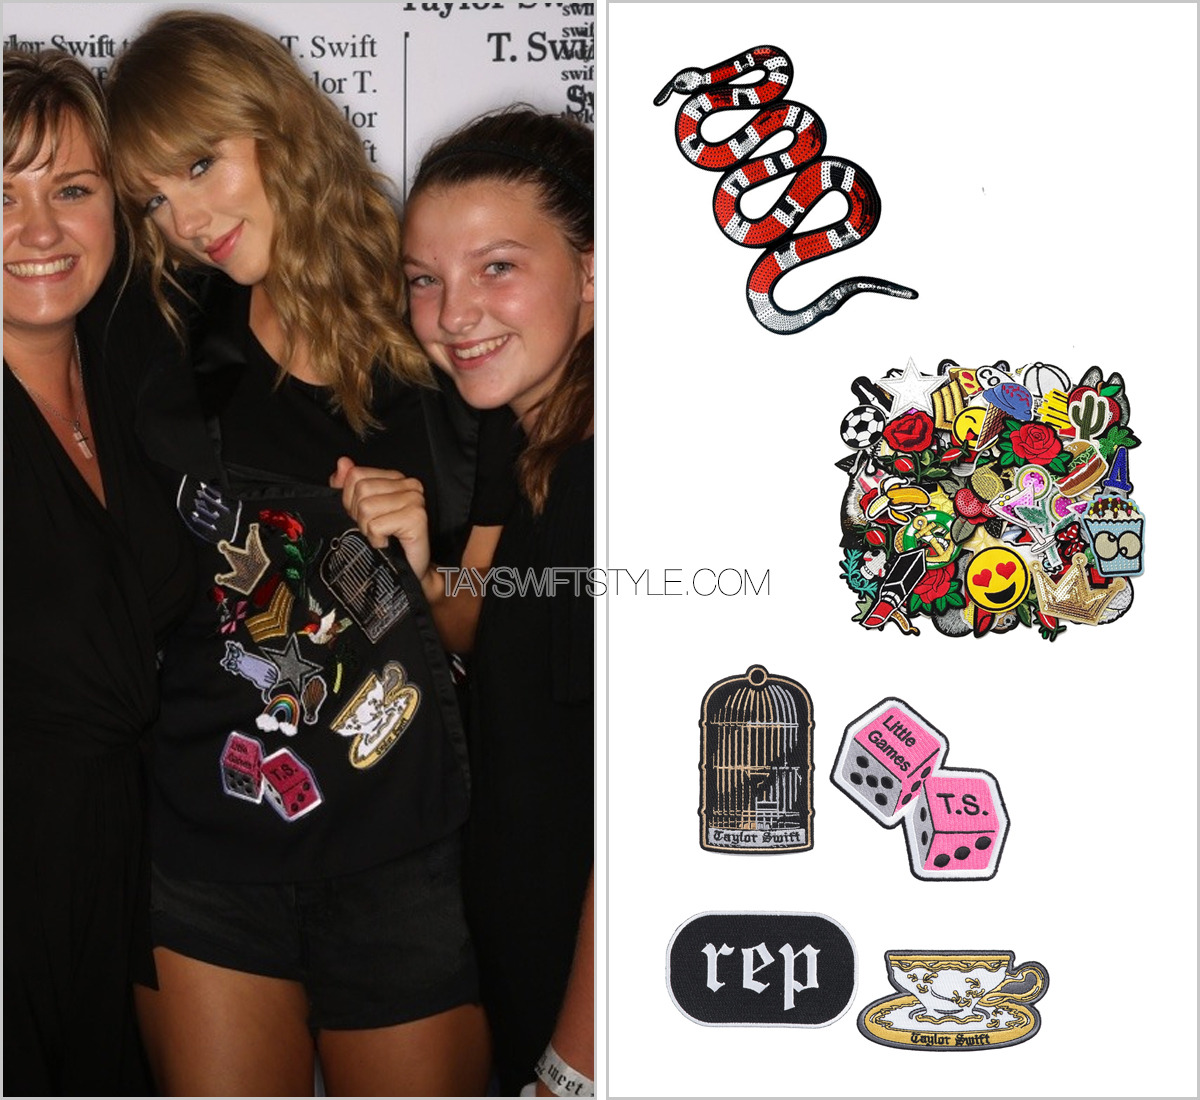 Taylor Swift Style — Reputation Tour Meet & Greet, Pittsburgh, PA